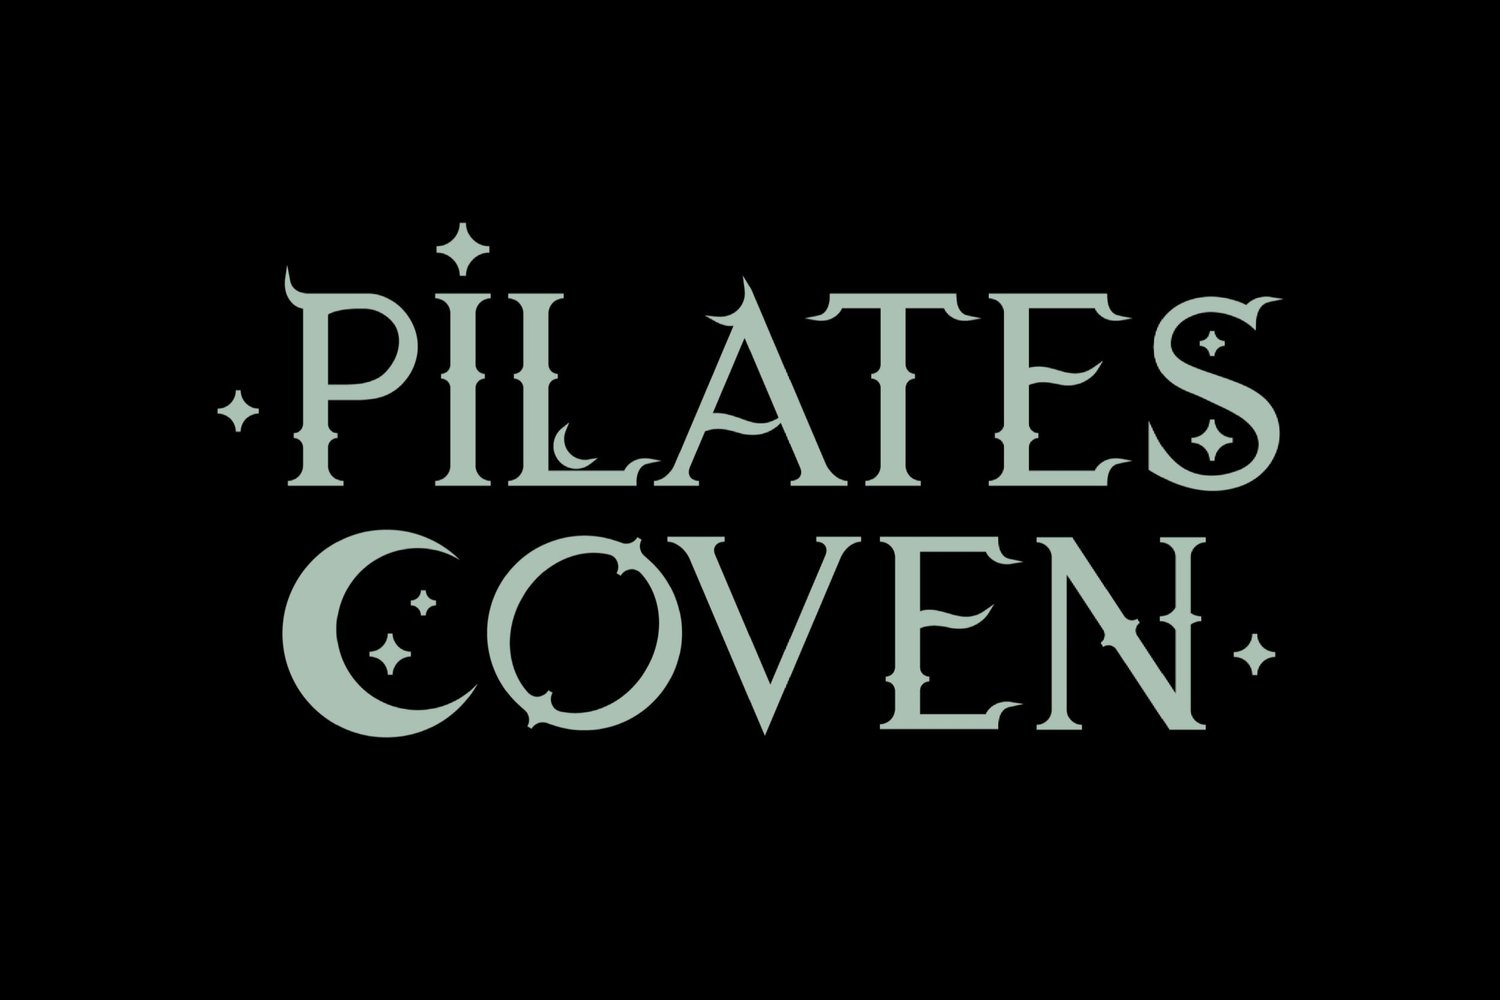 Pilates Coven LLC